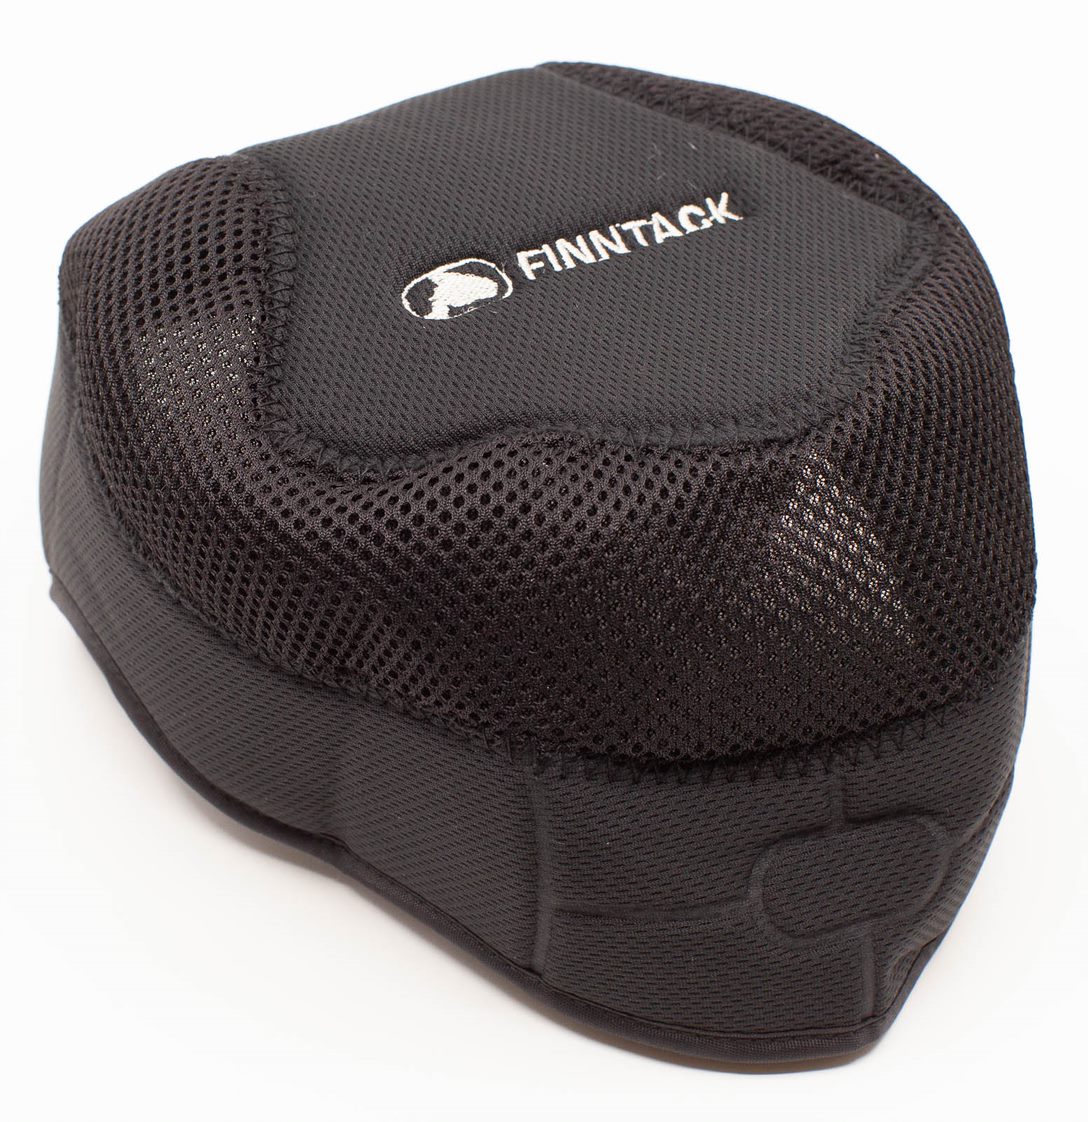 Finntack Pro Removable Lining for Trotting Helmet